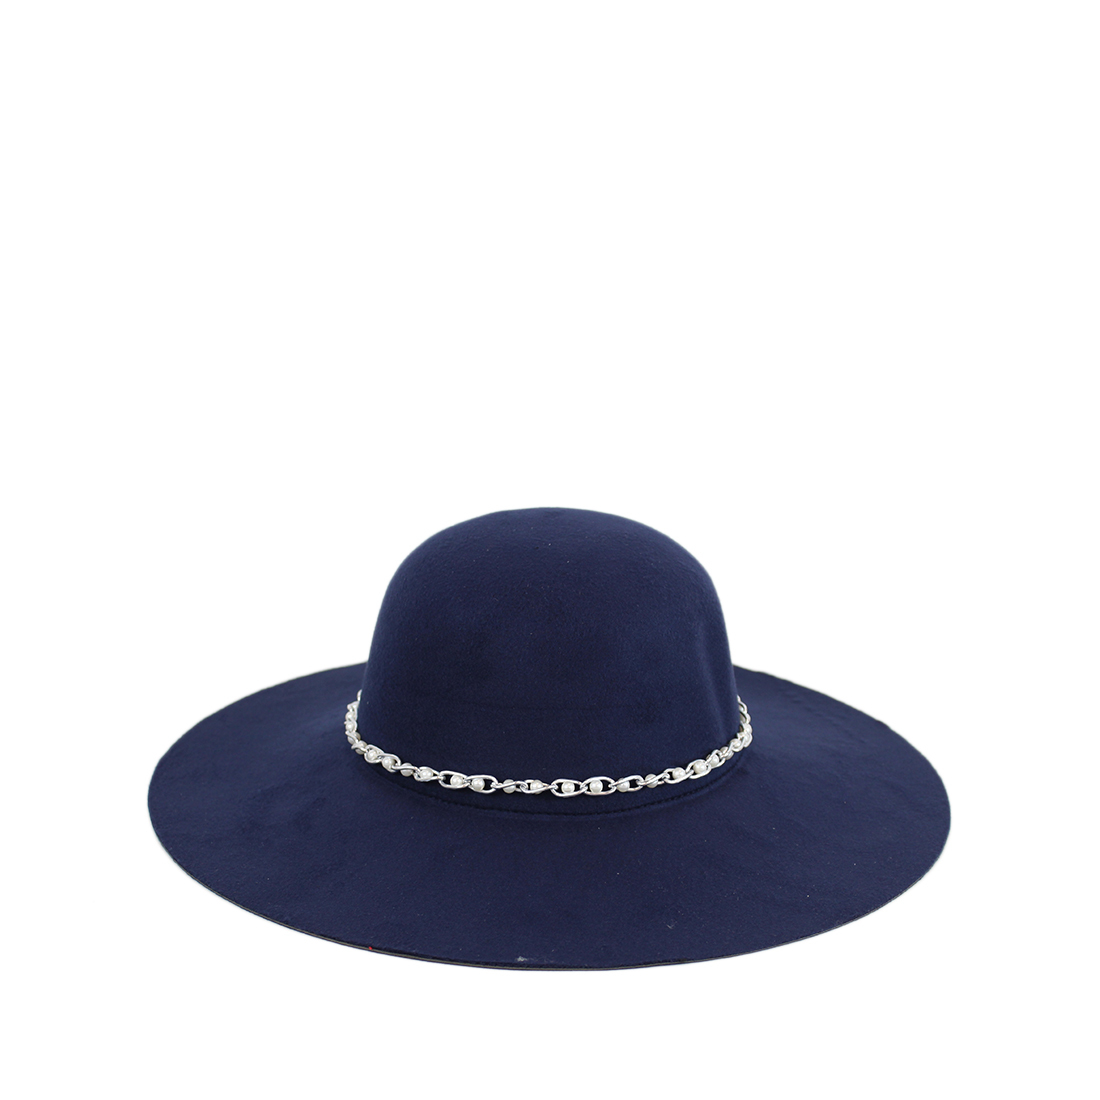 * Pearl Chain Detail Hat